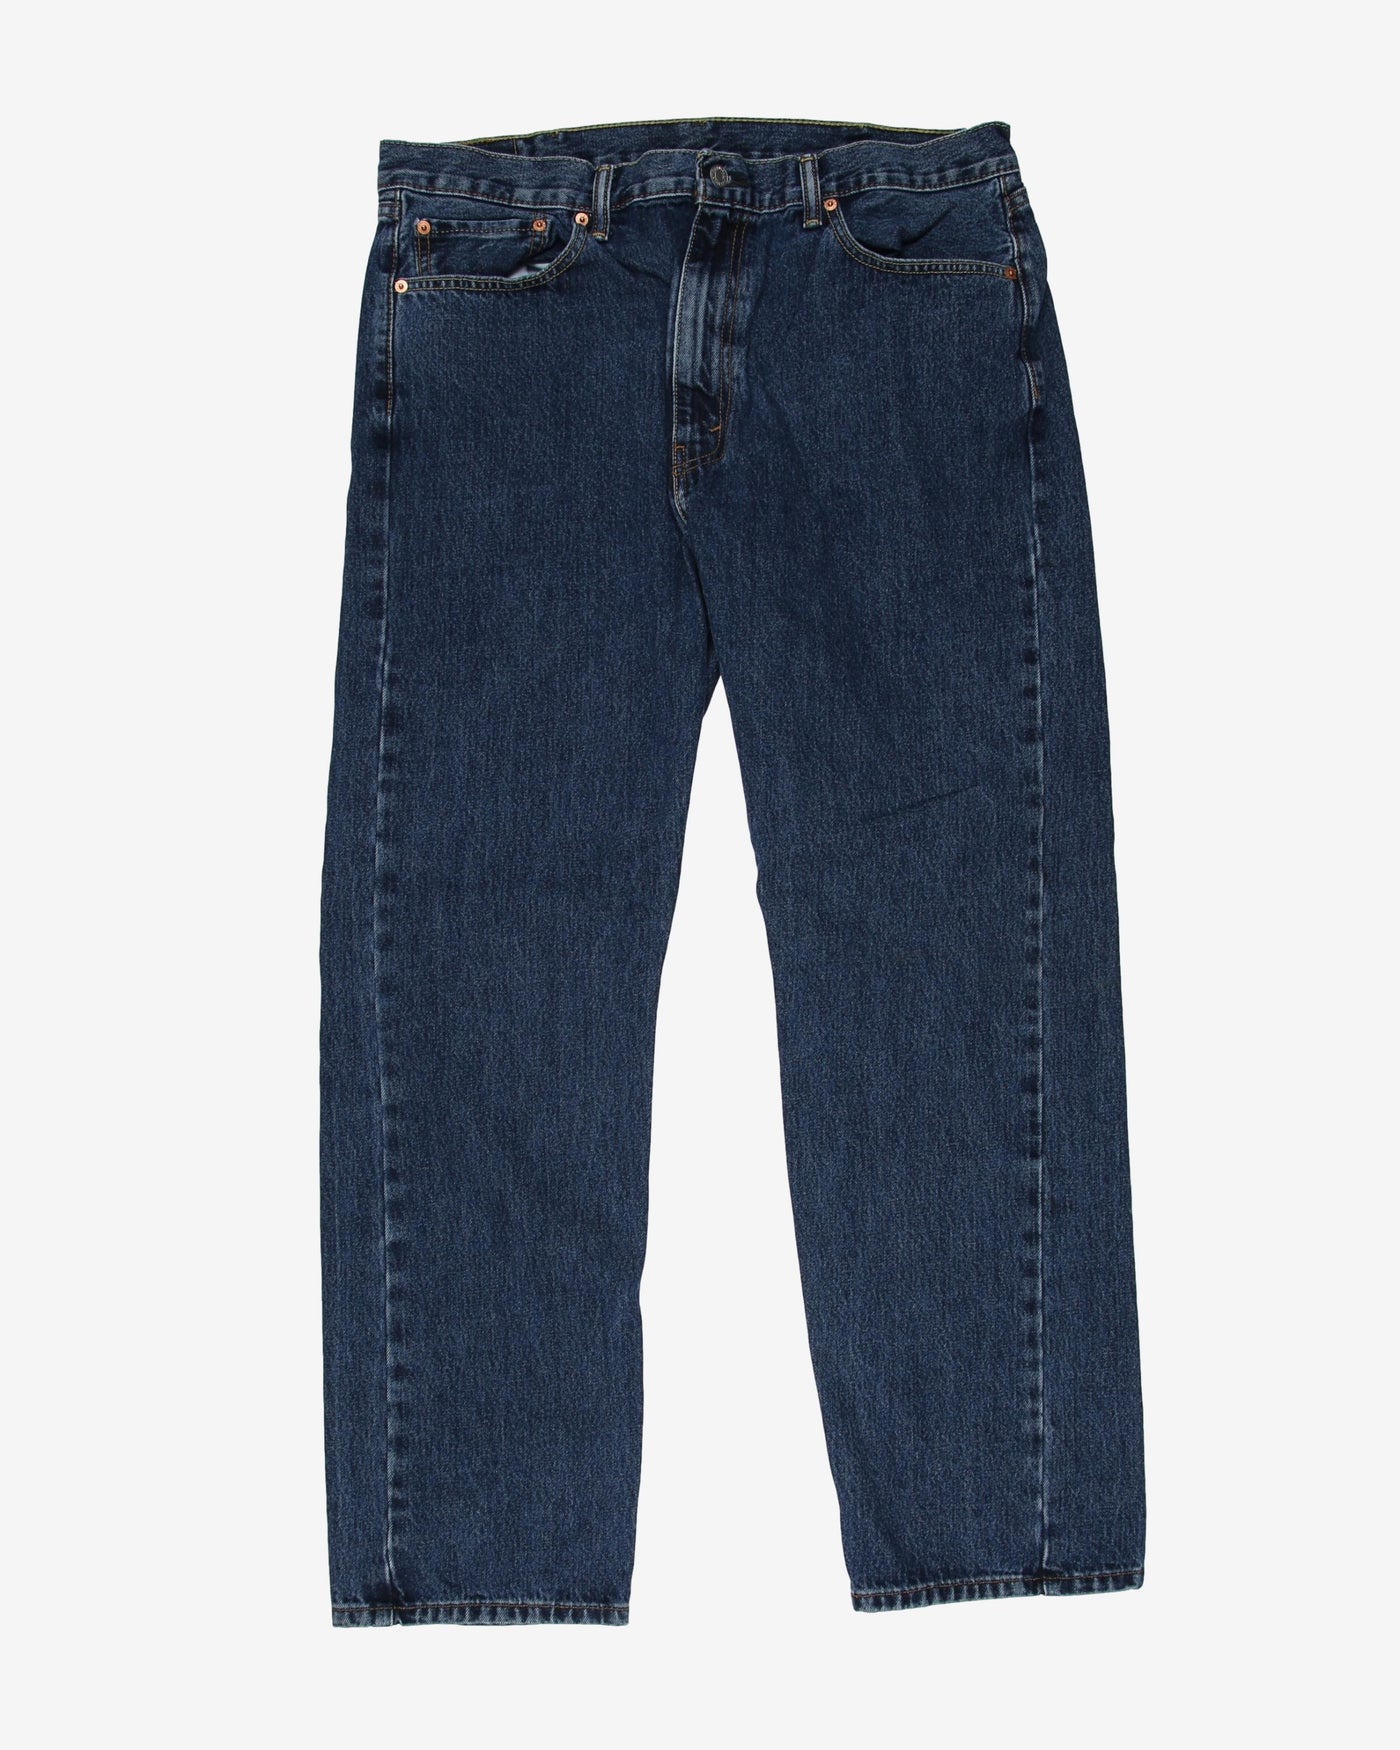 Levi's 505 Dark Blue / Navy Casual Denim Jeans - W39 L32